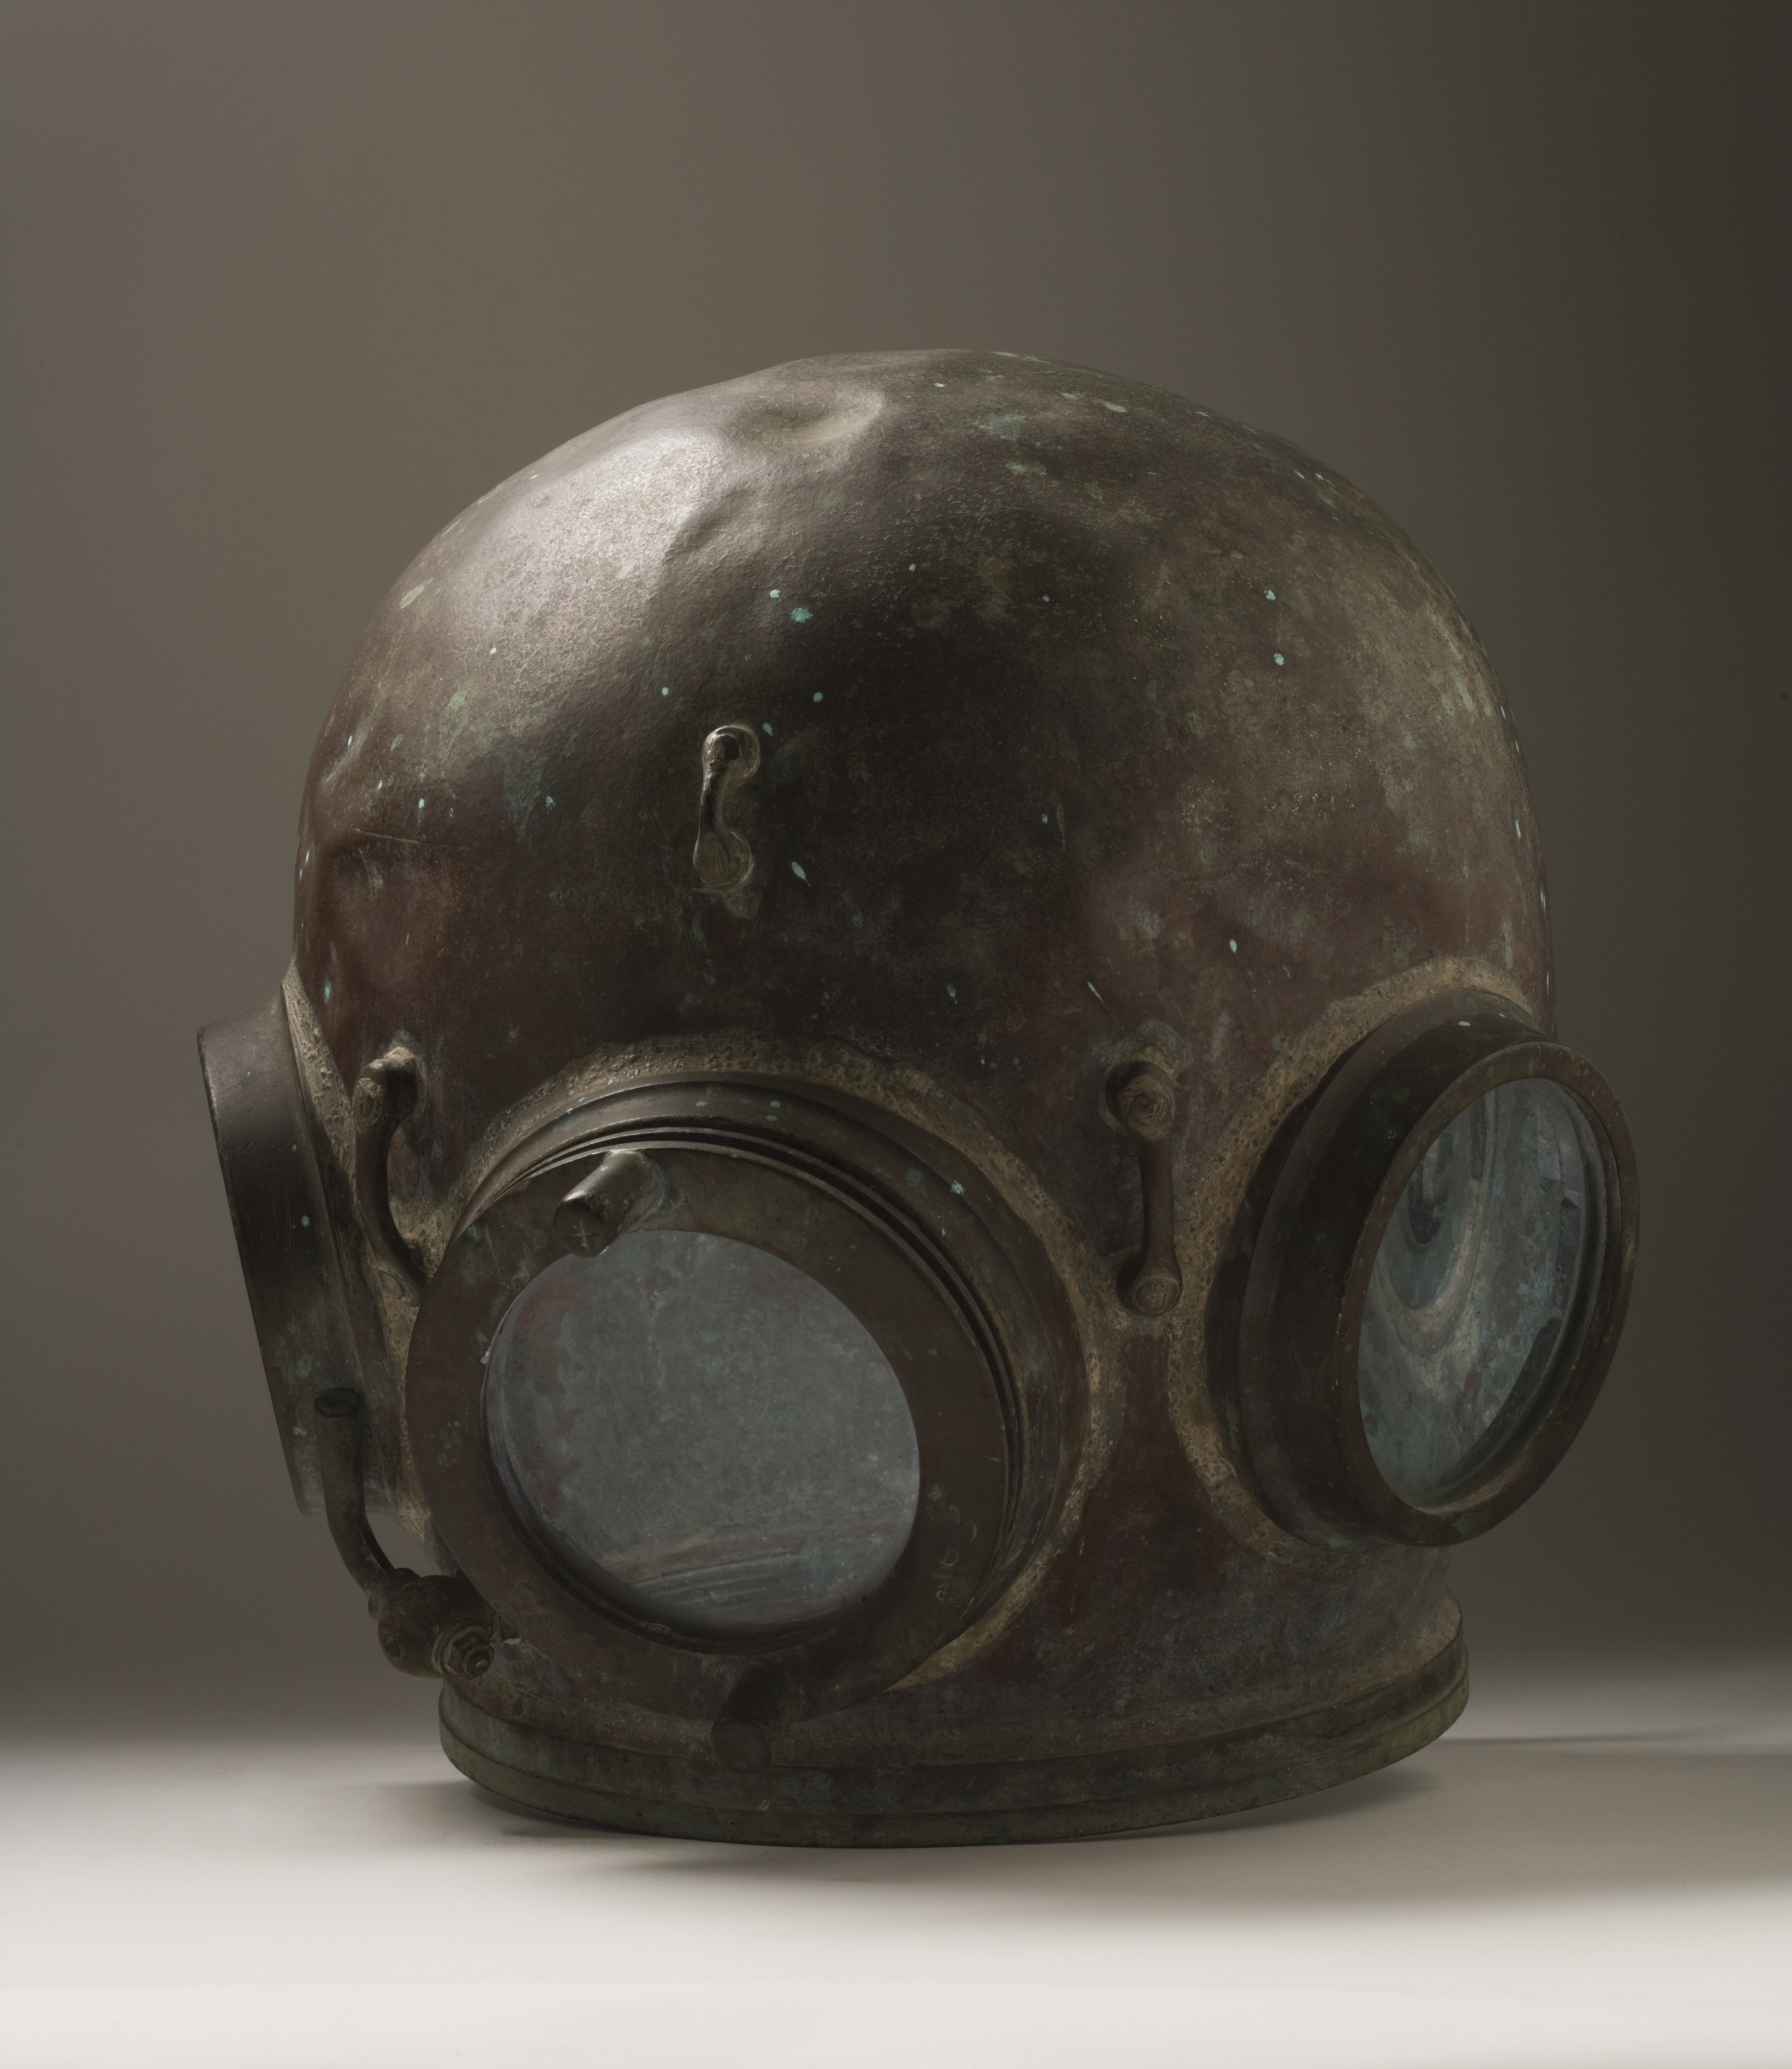 Diving helmet used for pearl diving